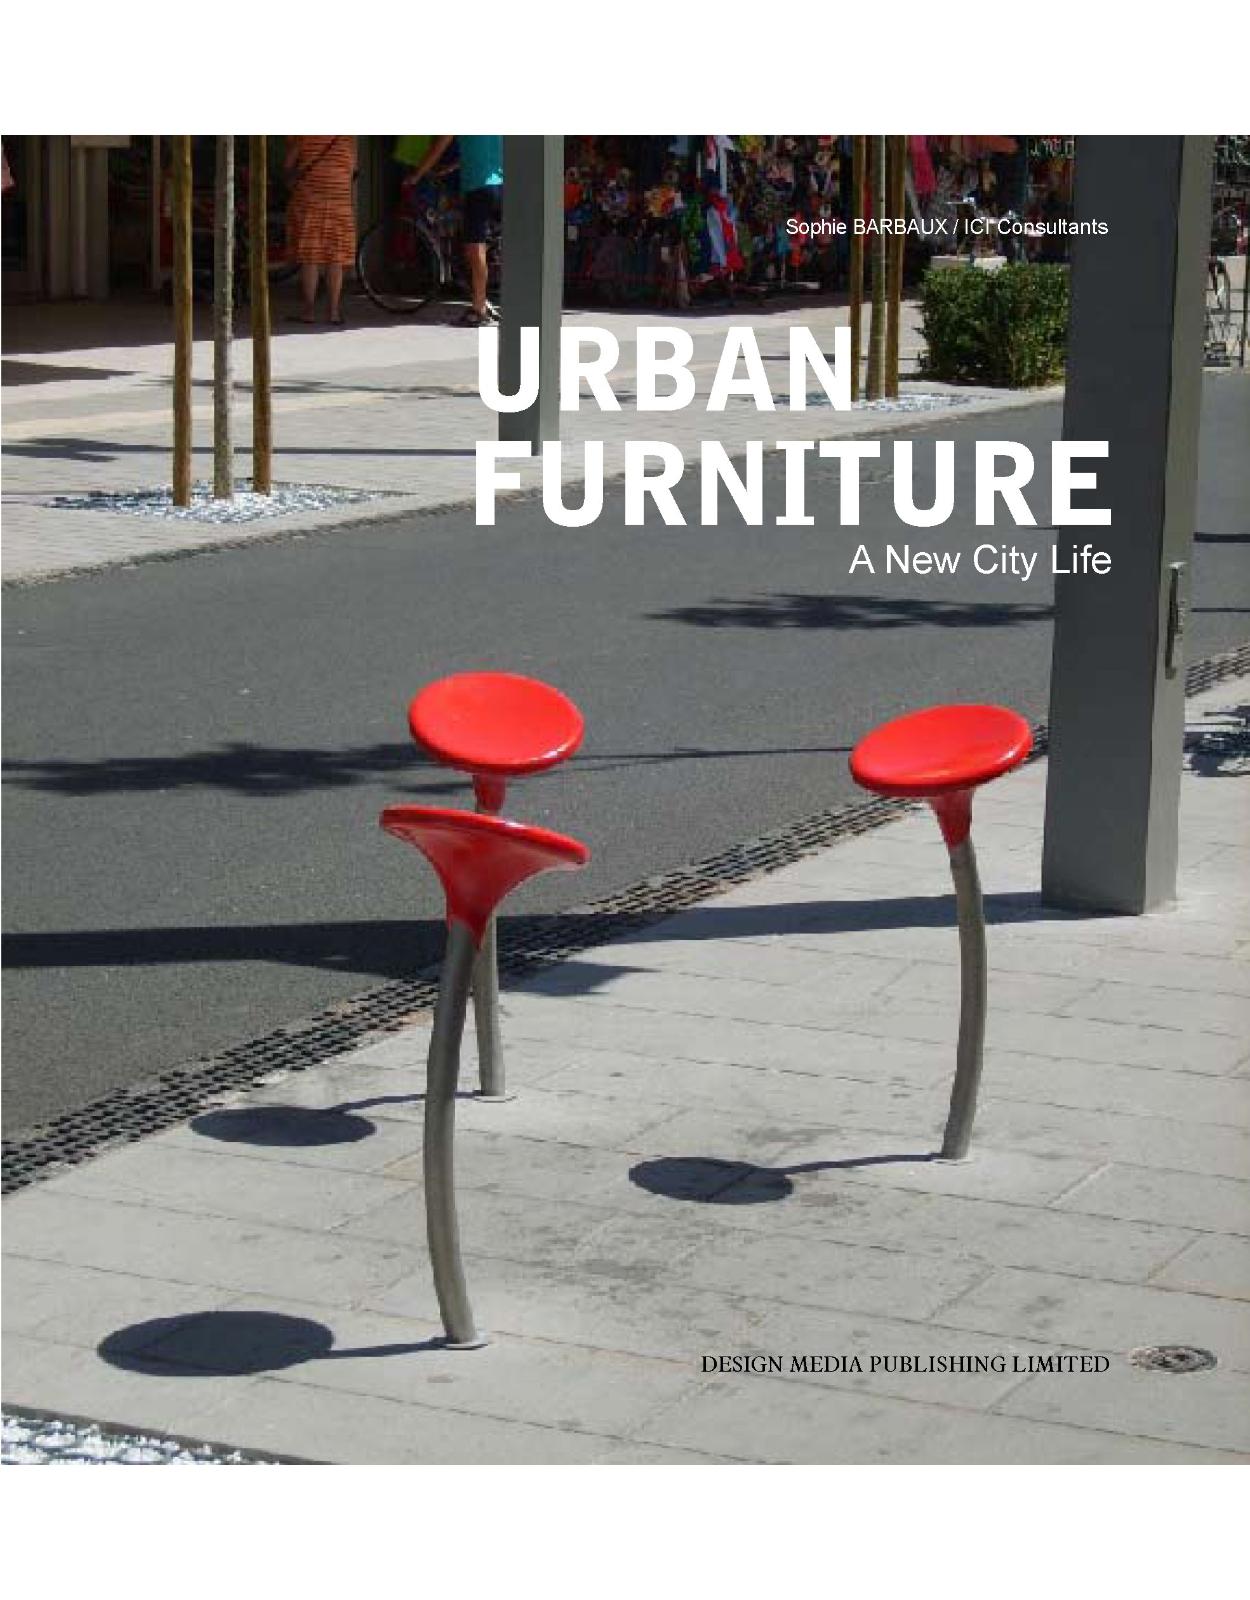 Urban Furniture: A New City Life